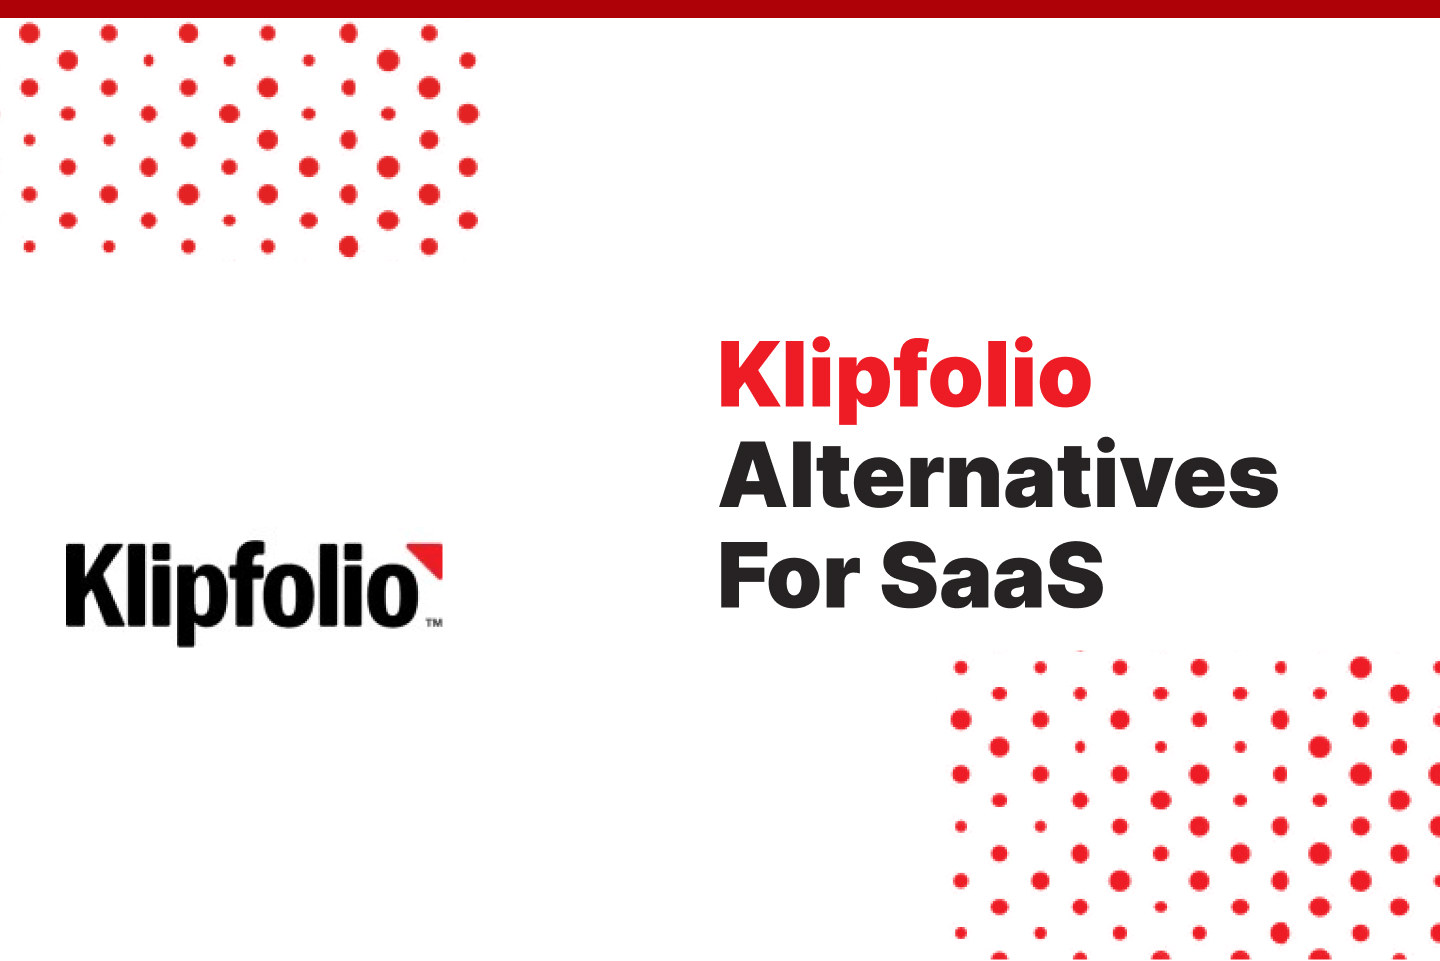 Top 8 Klipfolio Alternatives For Your SaaS